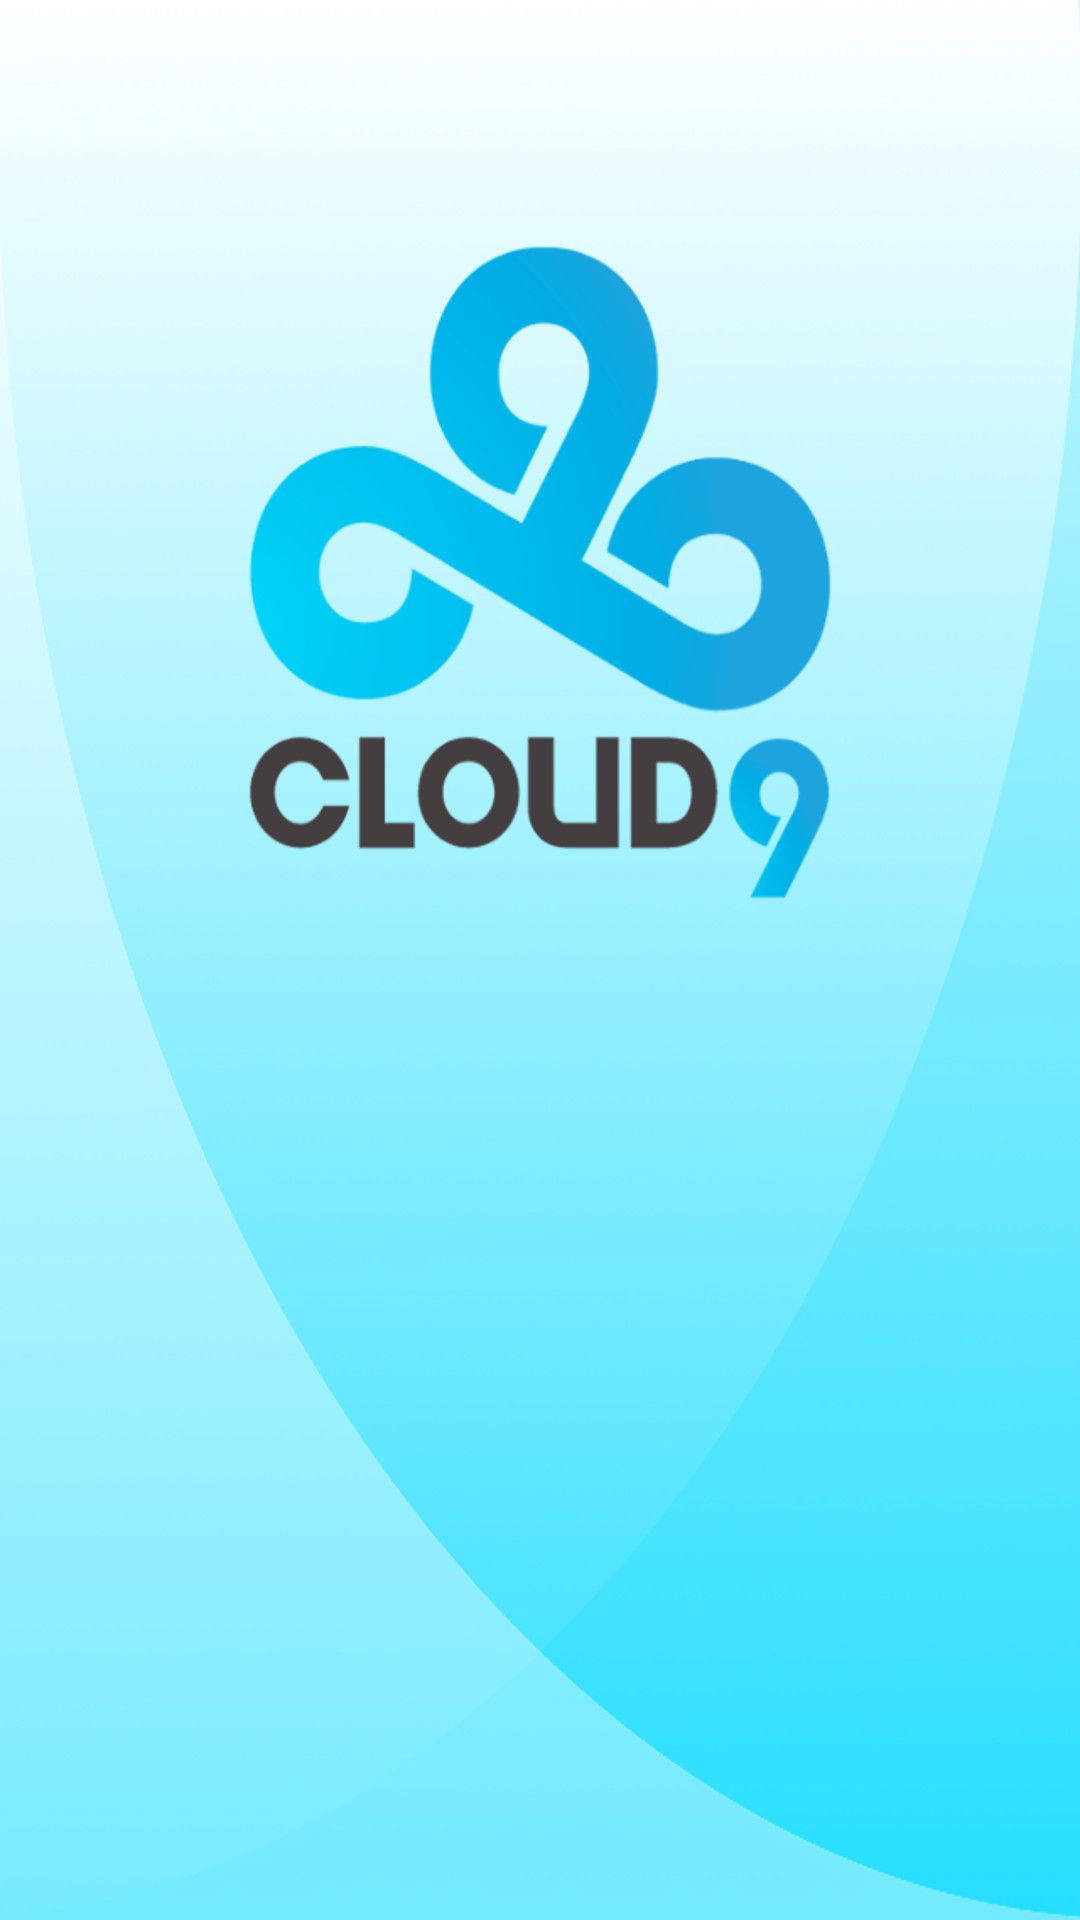 Cloud9 Logo Light Blue Texture Background